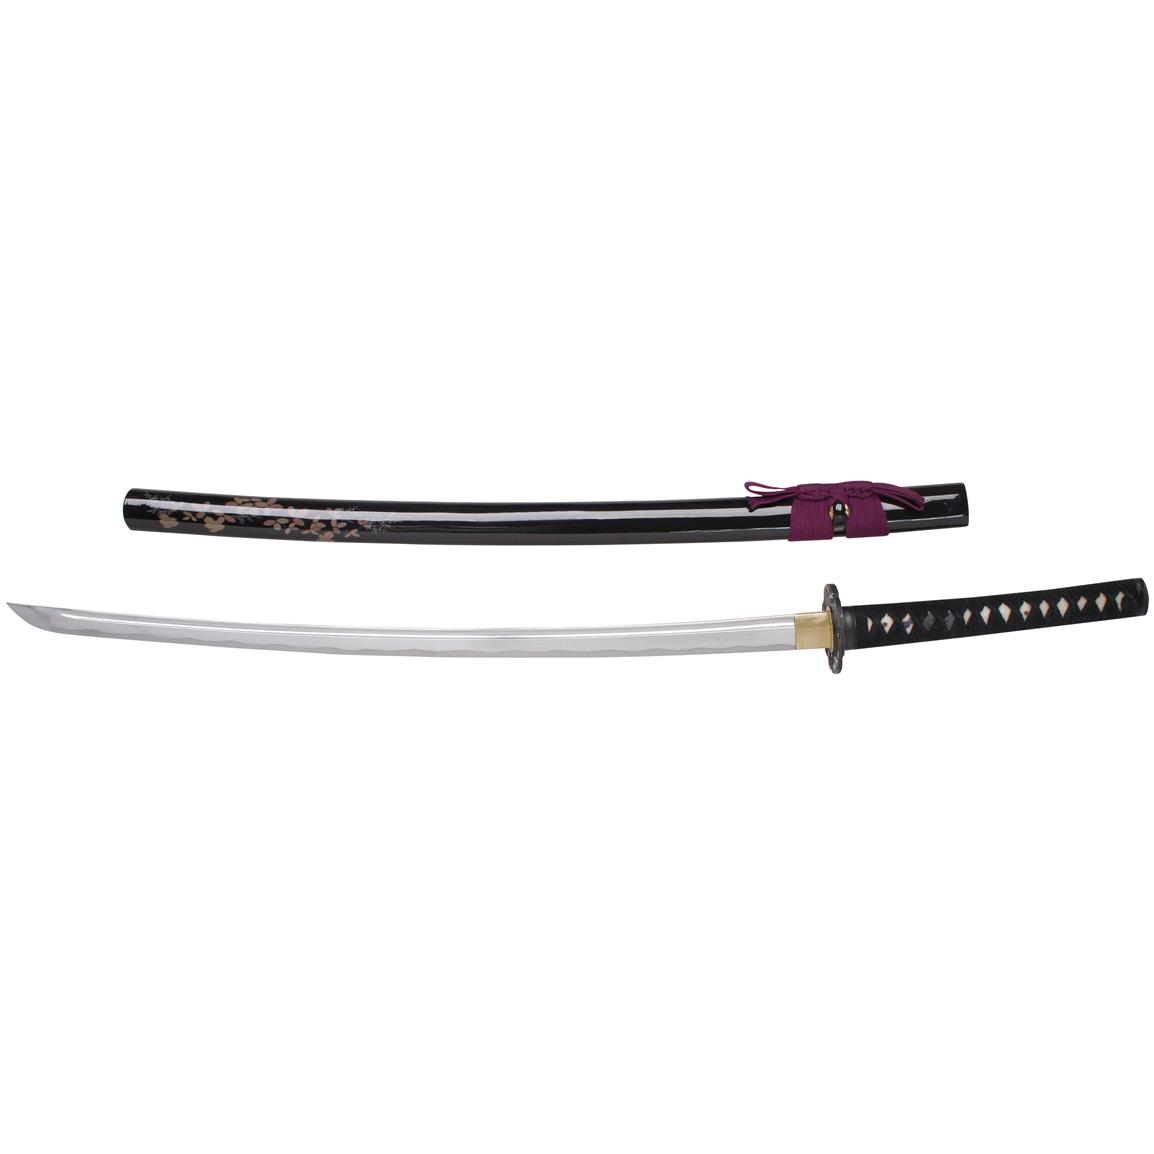 Master Cutlery MC-3051 Floral Imprint Samurai Sword, 41 inch Overall